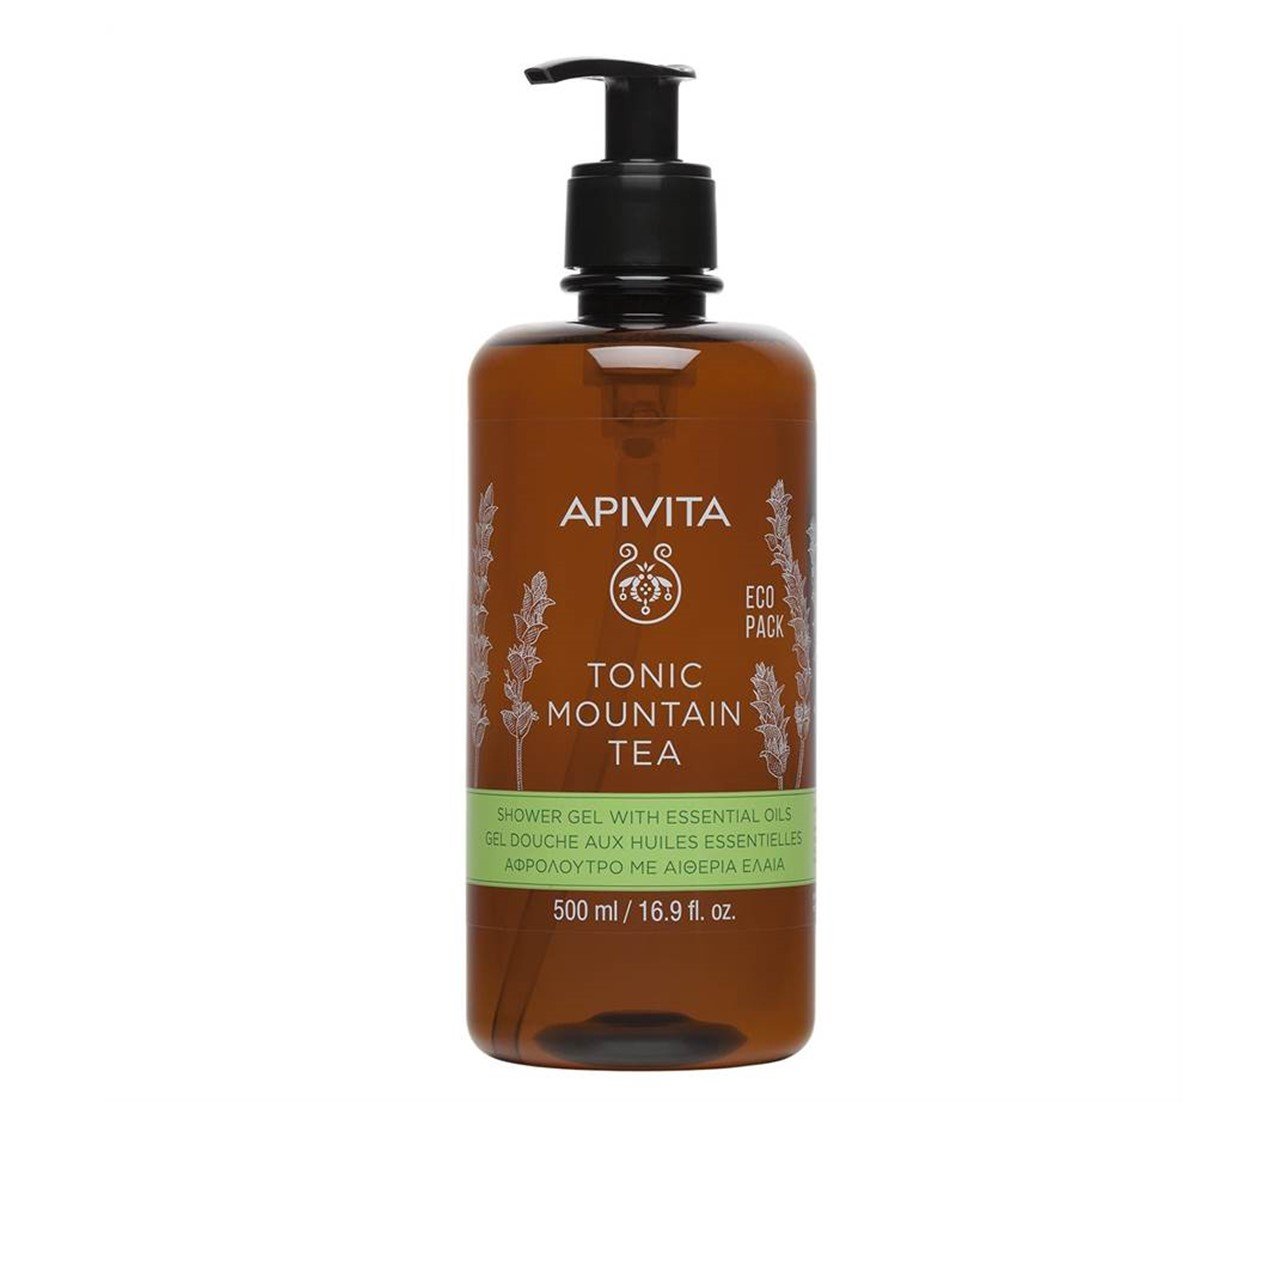 APIVITA Tonic Mountain Tea Shower Gel Essential Oils 500ml